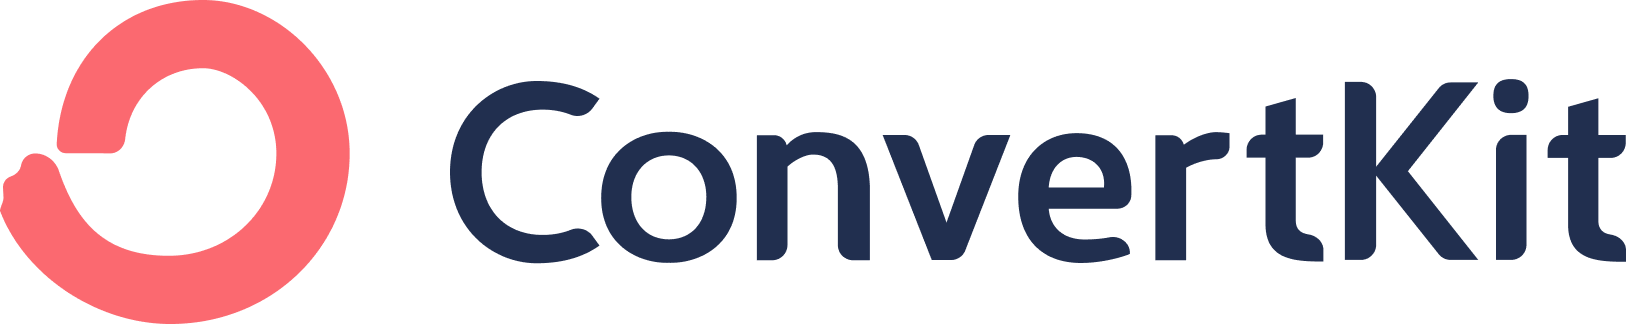 convertkit logo | Passive Income M.D.